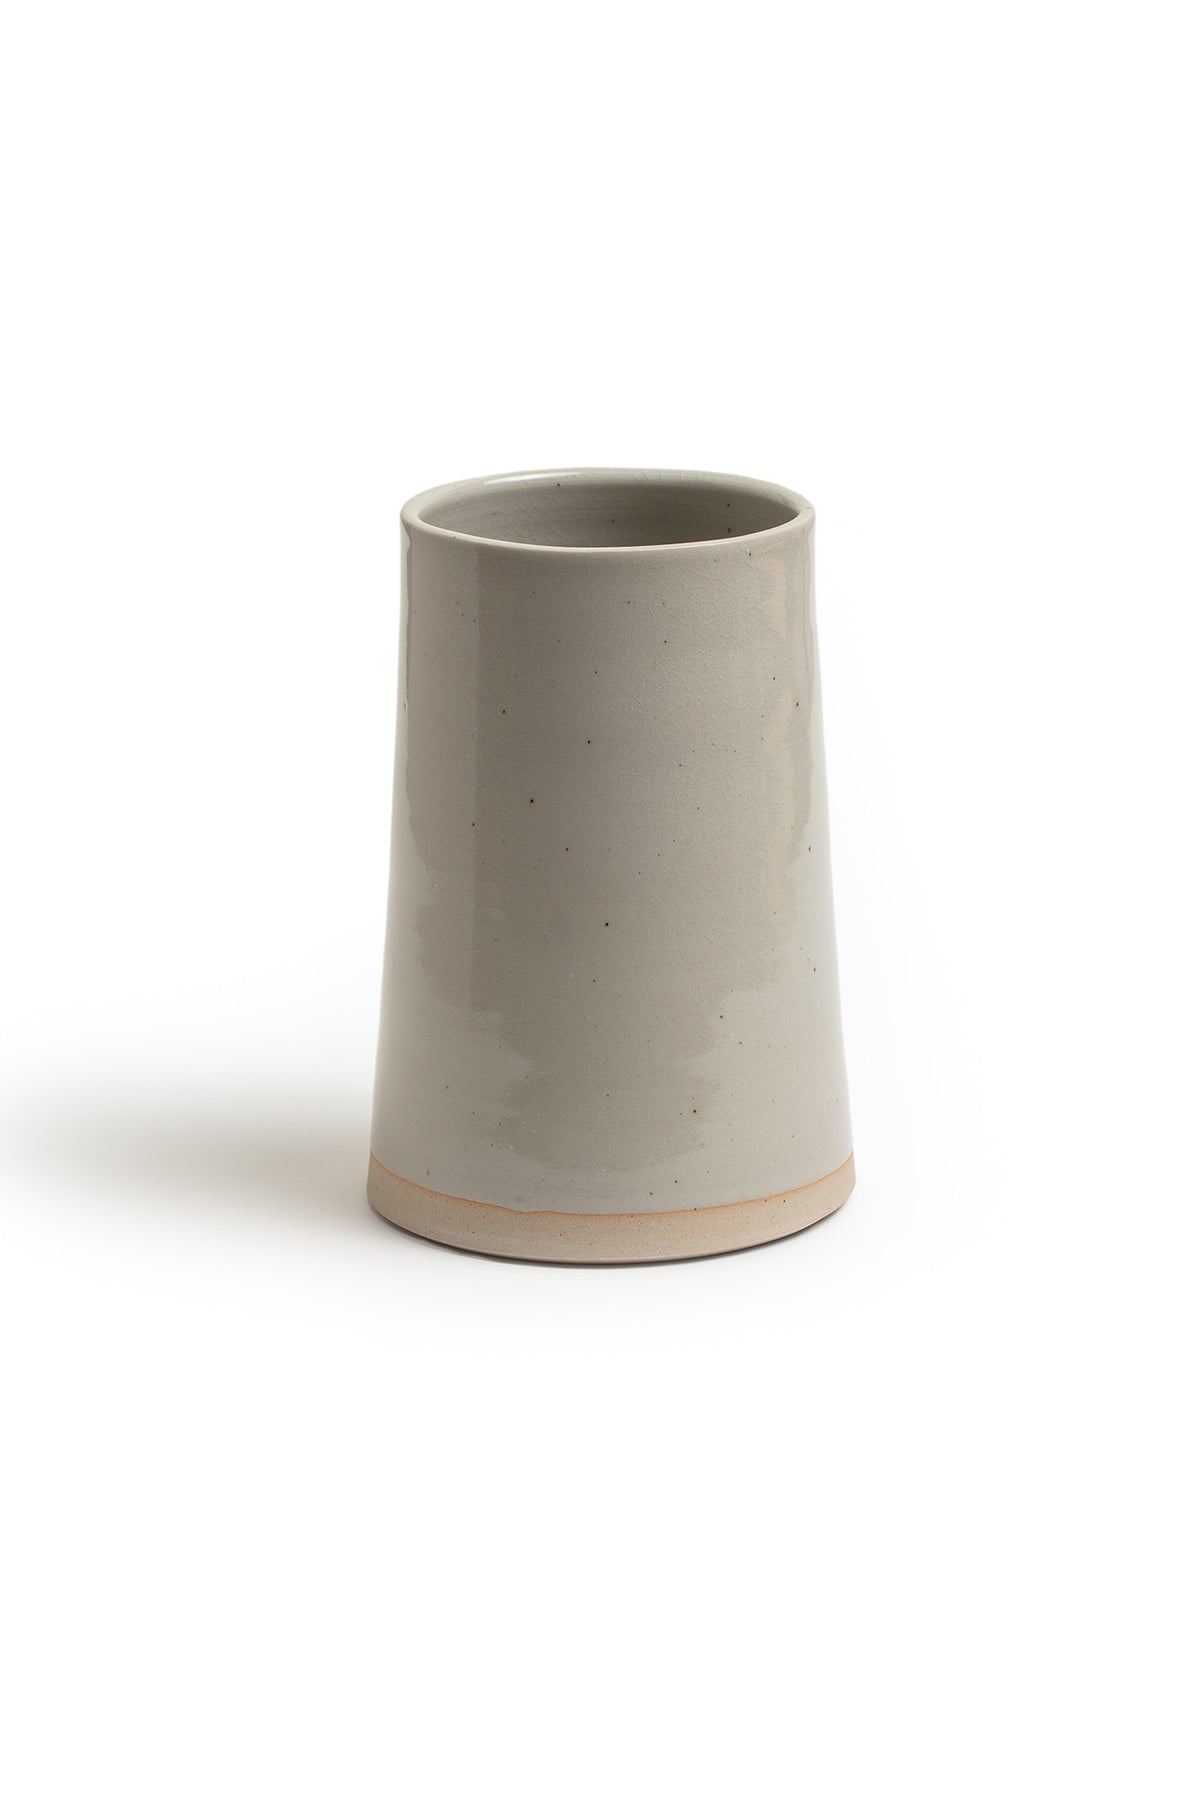 Jenny Graham Large Vase Mist-20913300373697